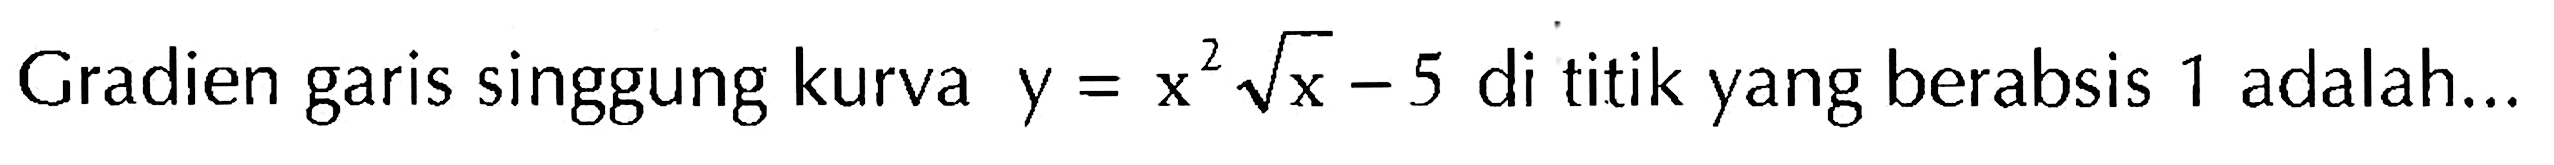 Gradien garis singgung kurva y=x^2 akar(x)-5 di titik yang berabsis 1 adalah... 